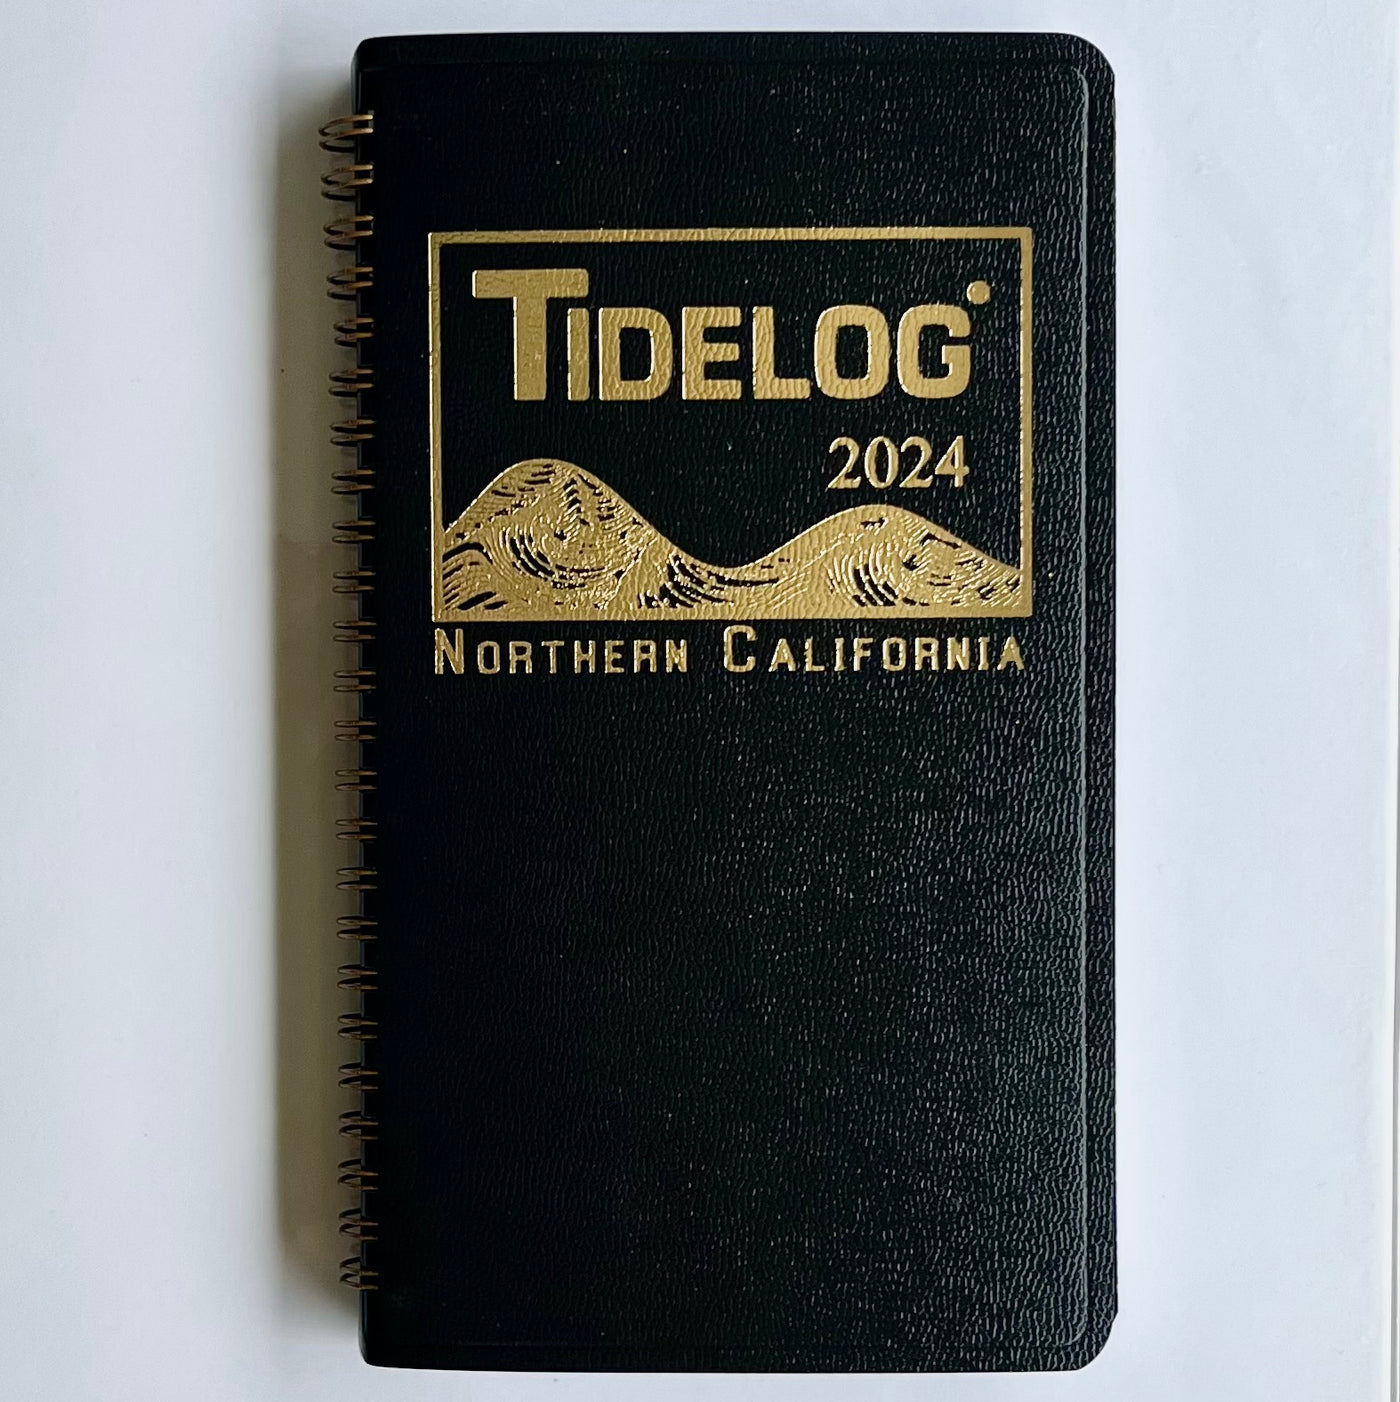 Northern CA California Tidelog 2024